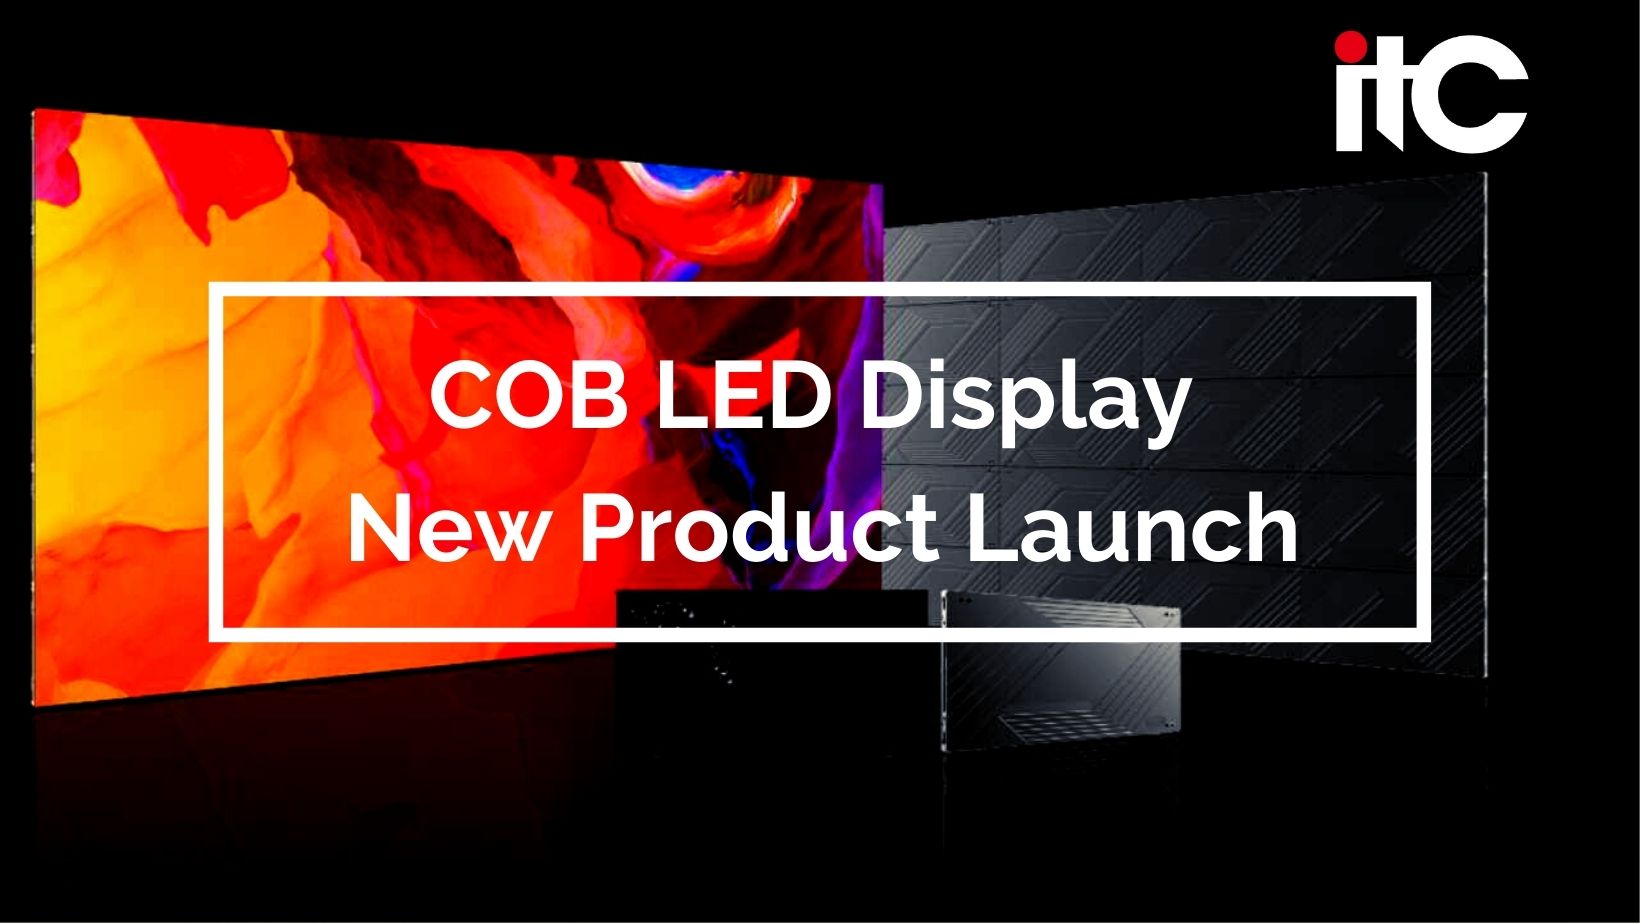 itc COB LED Display New Product Launch